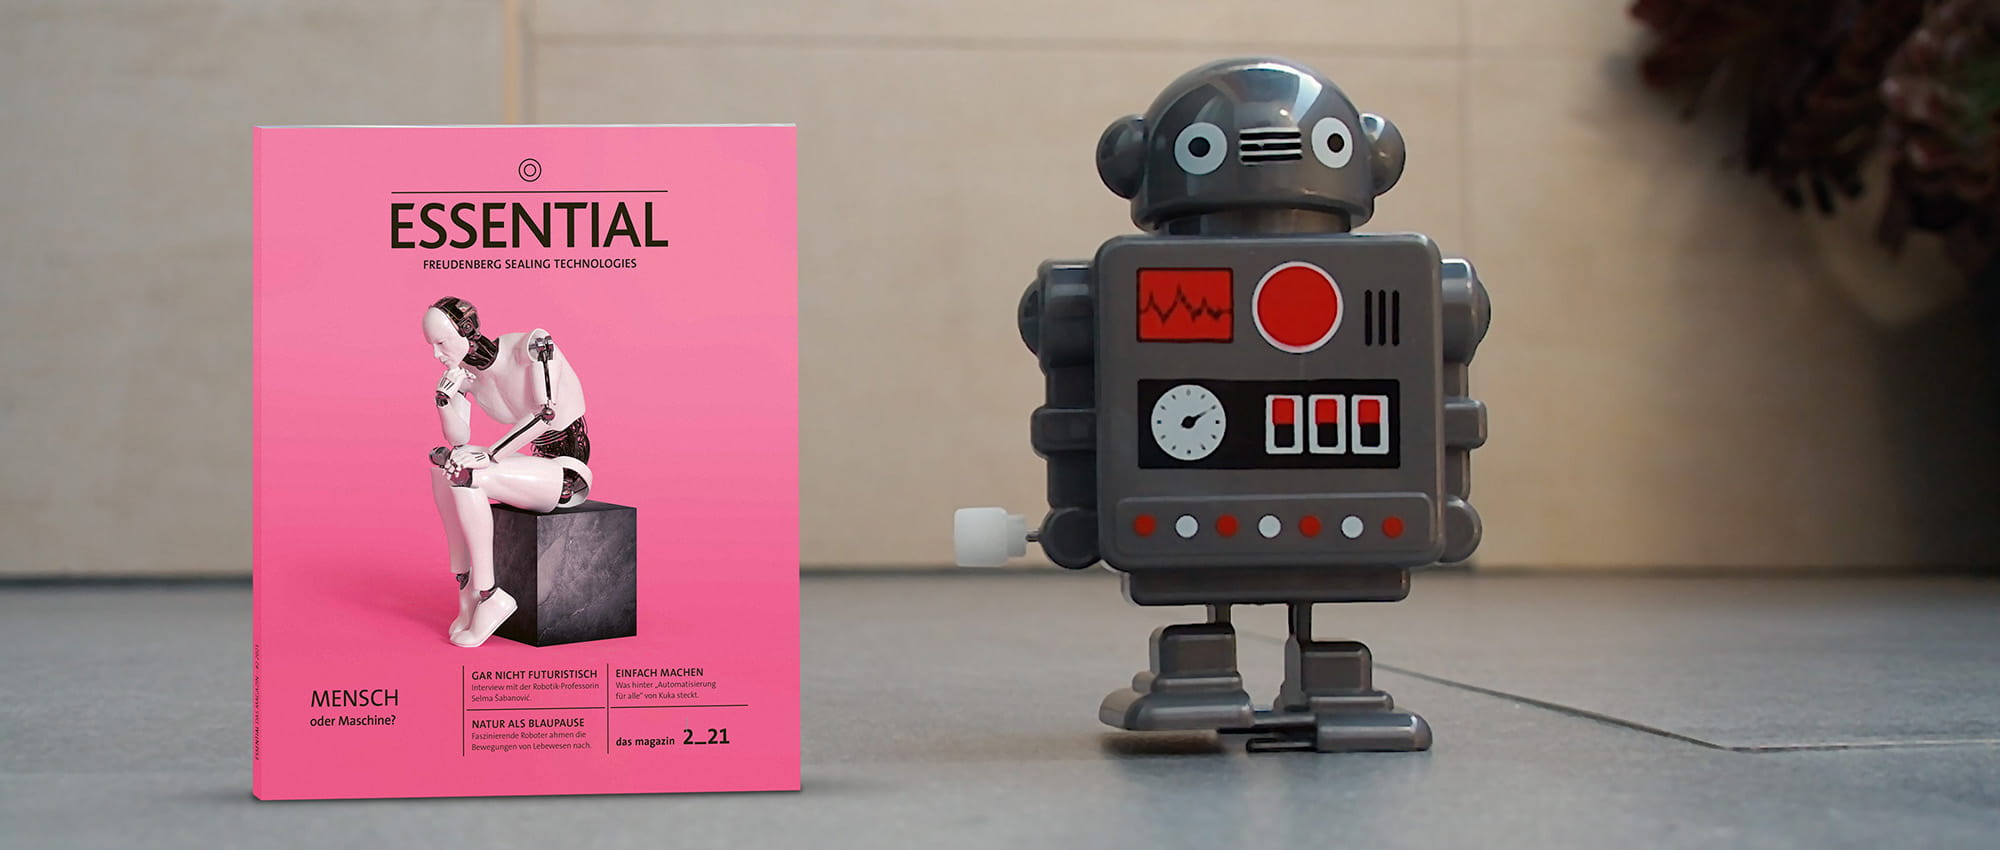 neues Essential-Magazin neben Roboter abgebildet